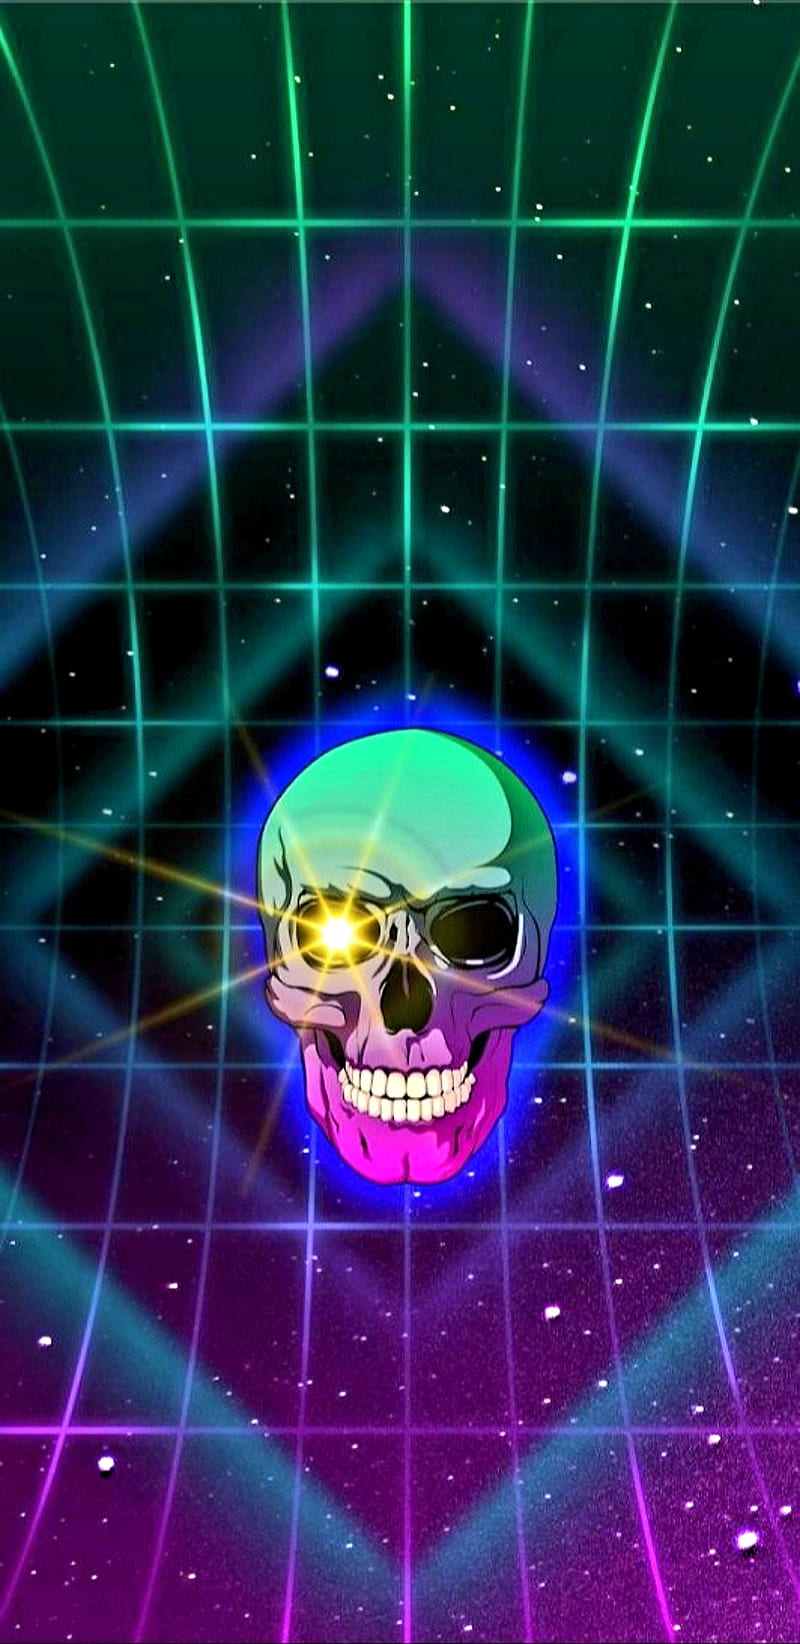 Download Majestic Galaxy Skull Wallpaper | Wallpapers.com